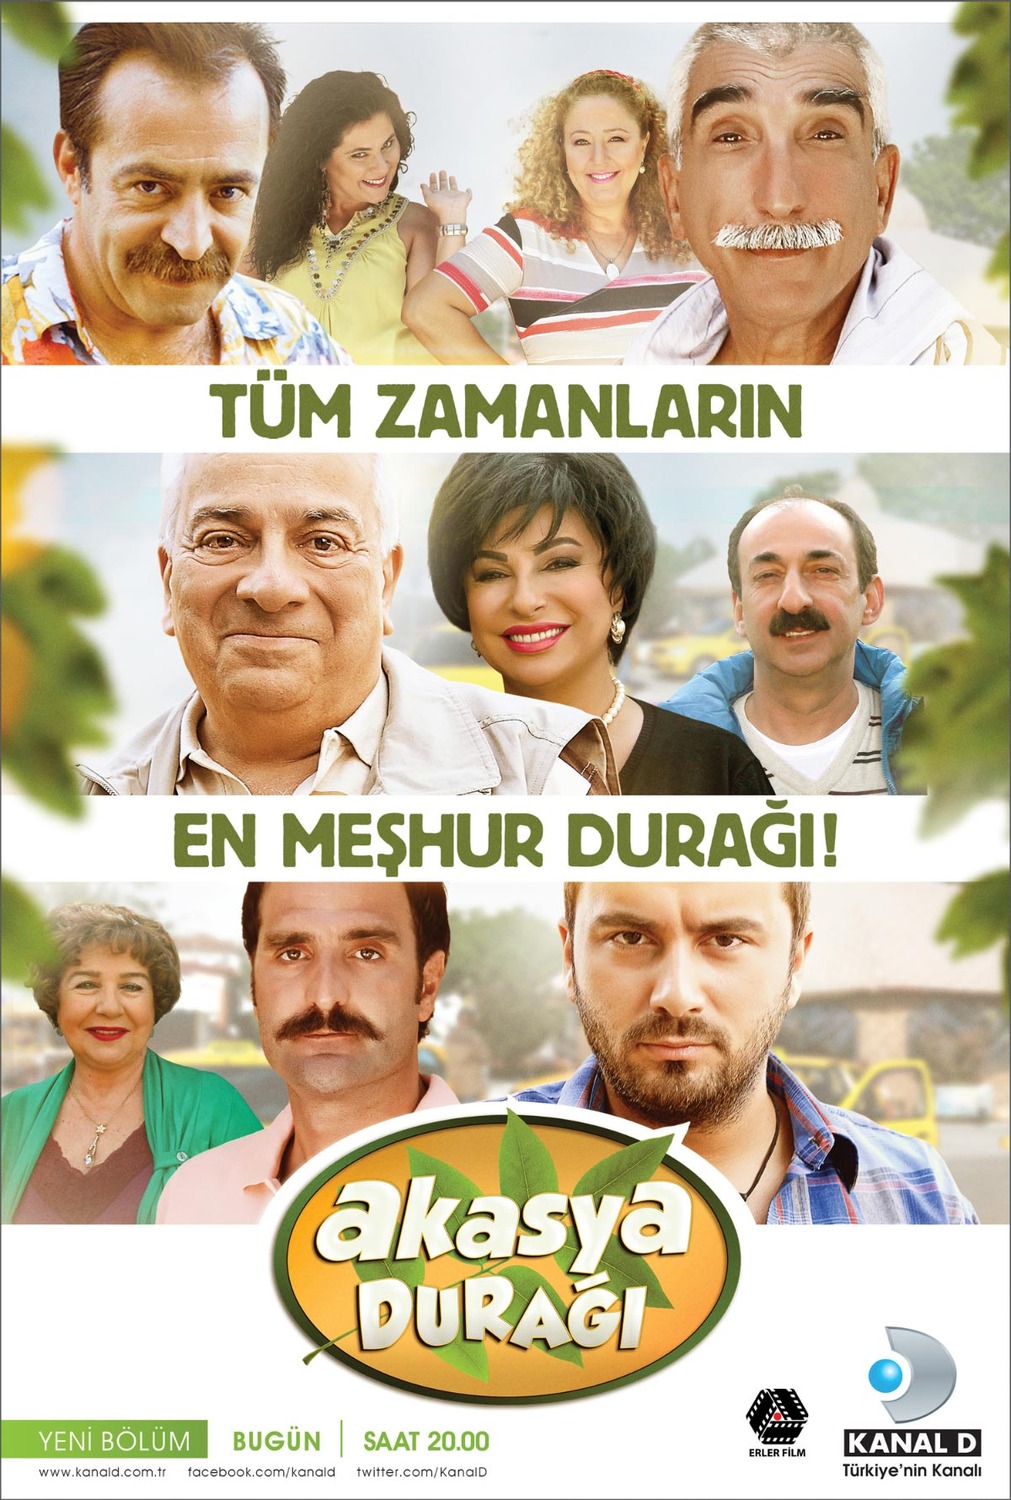 Extra Large TV Poster Image for Akasya duragi 